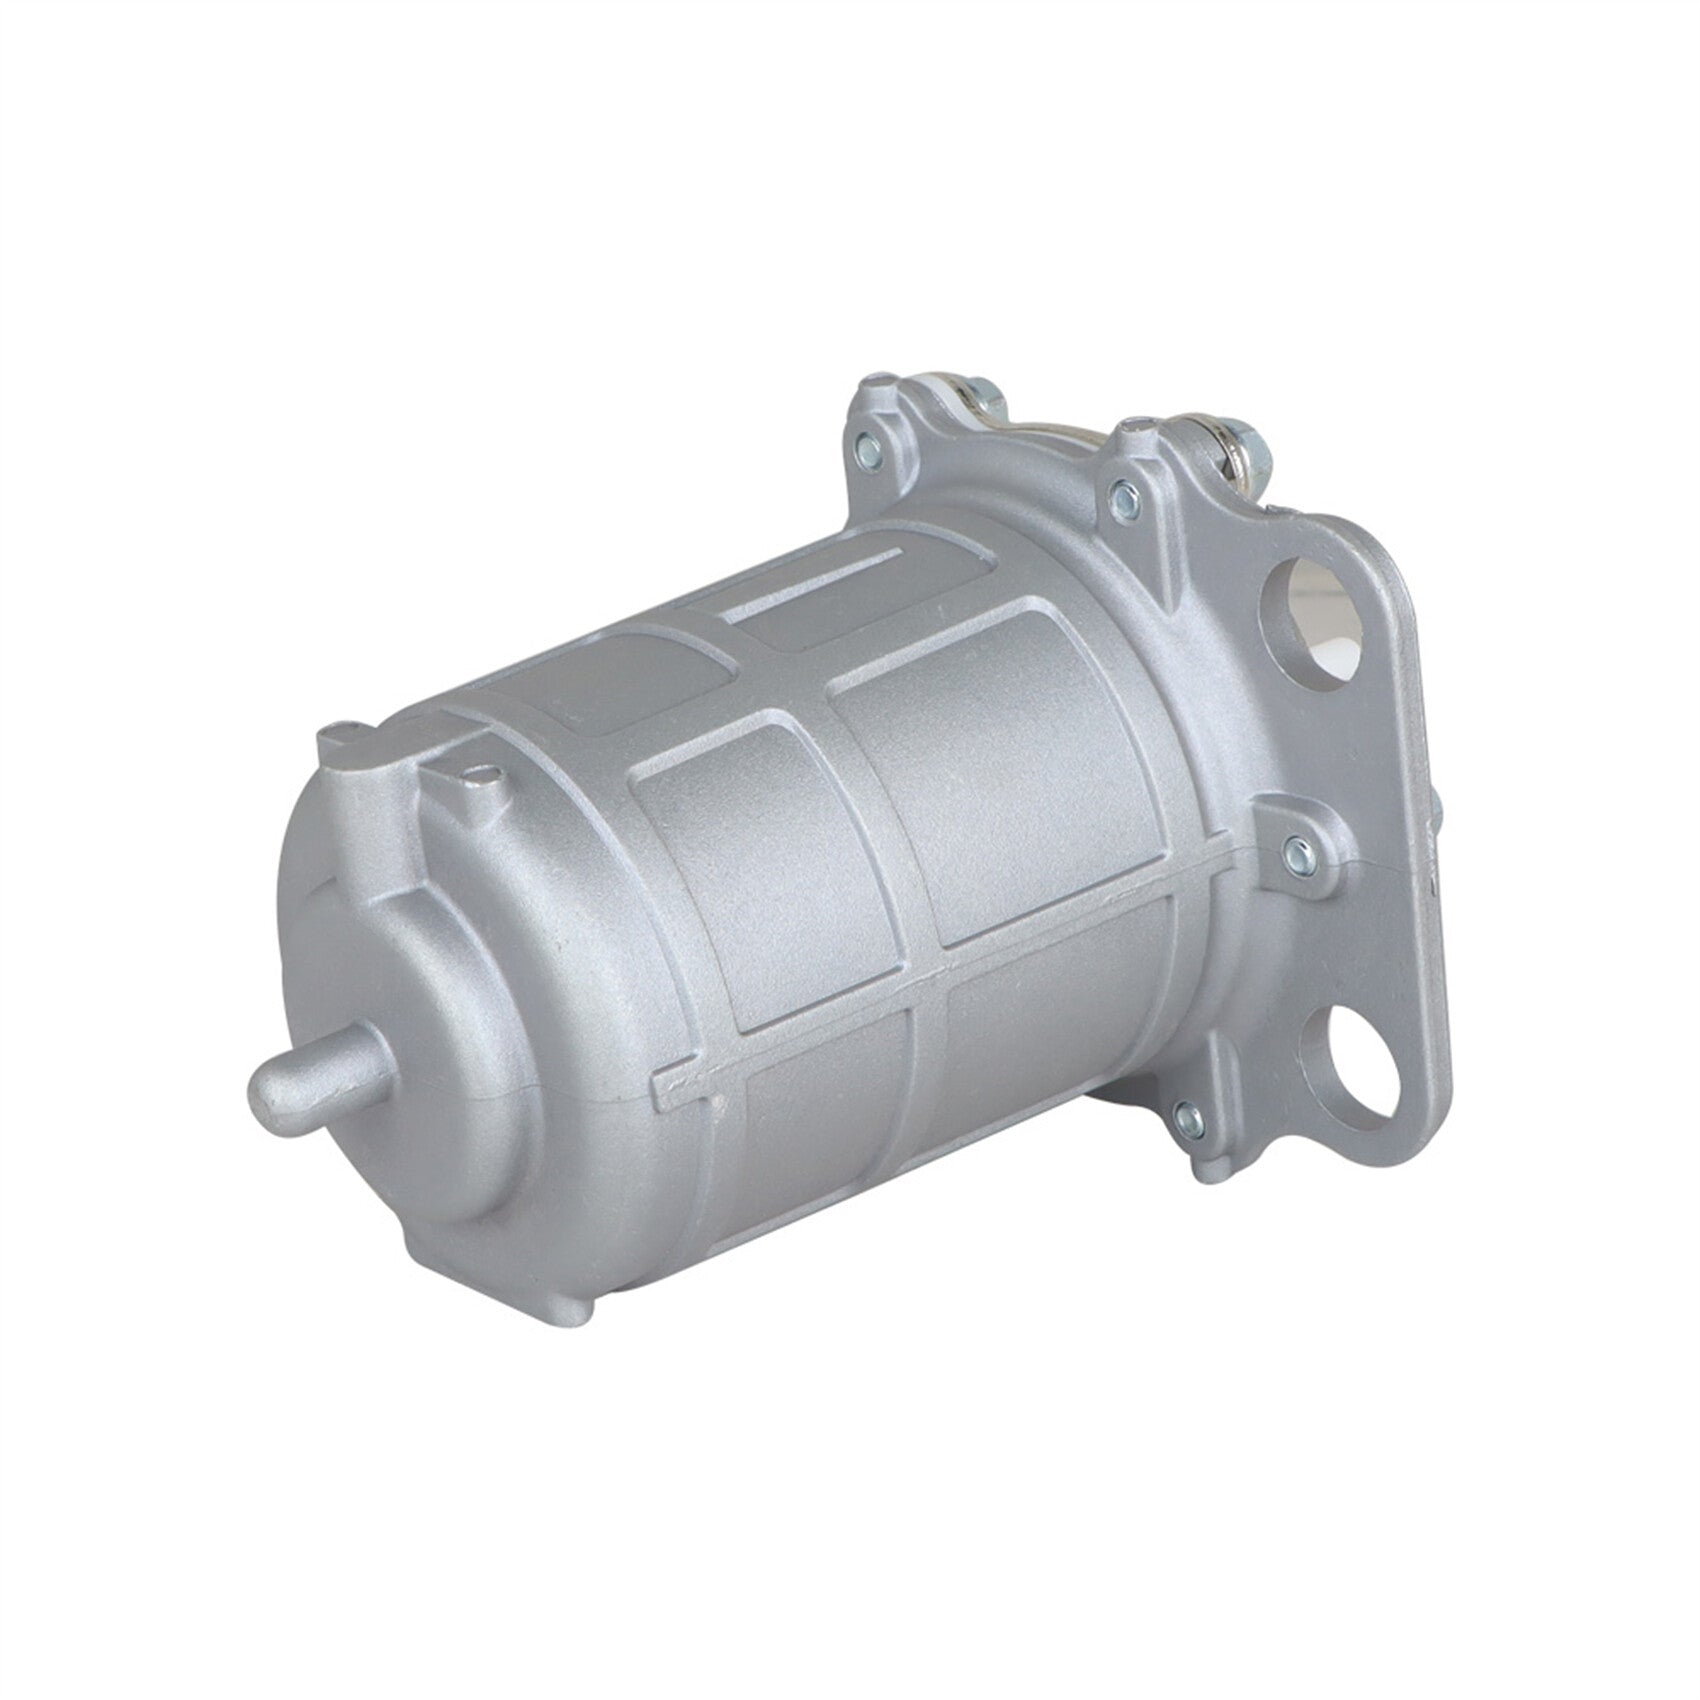 labwork Fuel Pump Replacement for Honda Shadow VT750 VT1300 TRX680 2010-2020 16700-HN8-601 16700-HN8-A62 (SS)